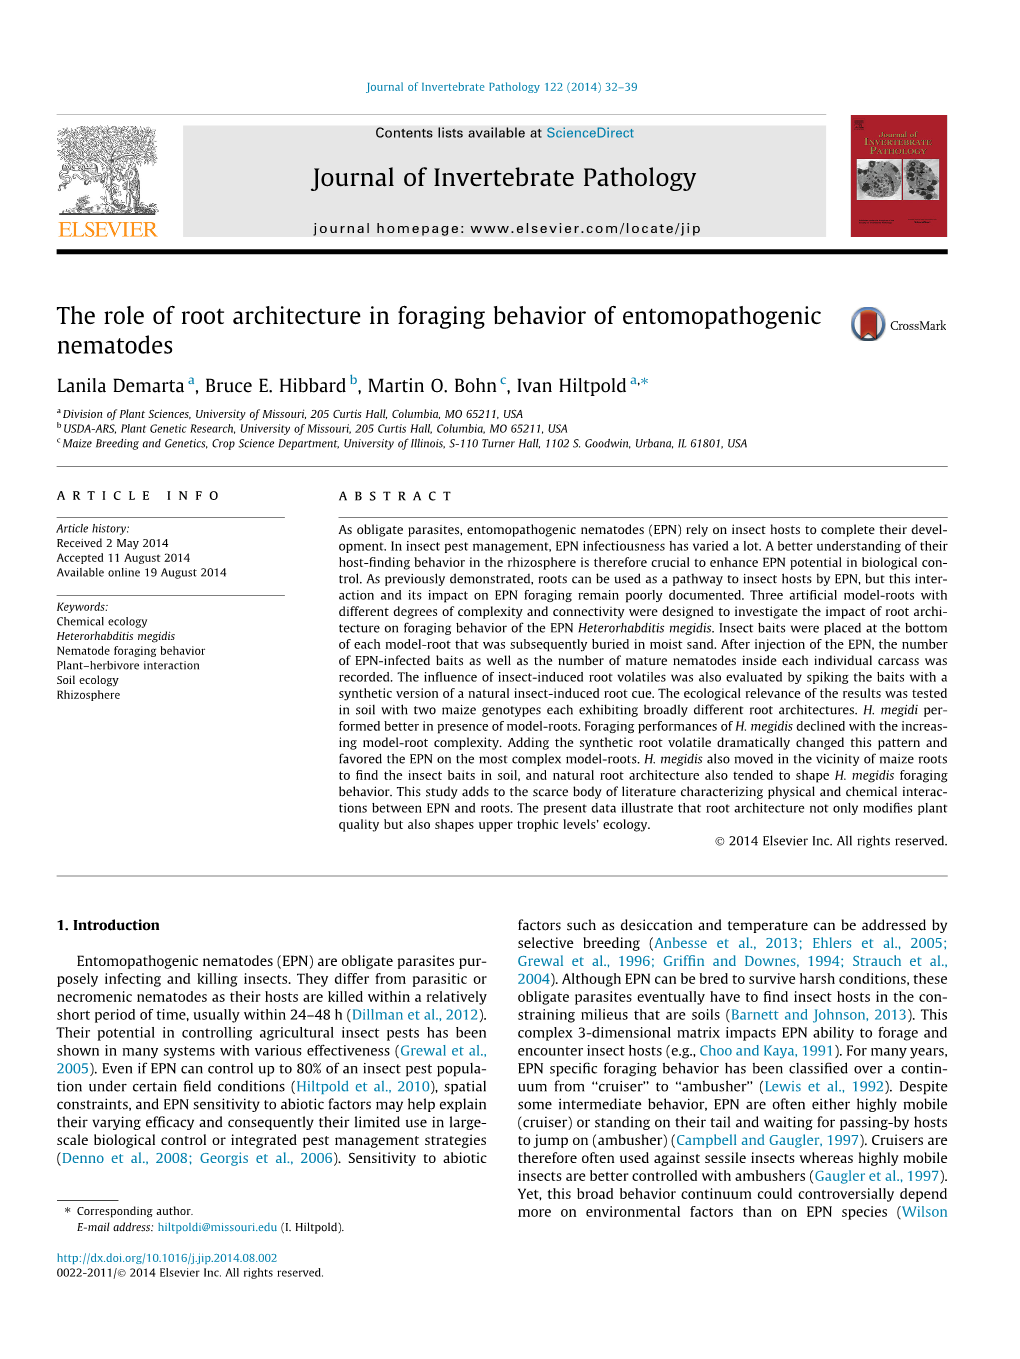 The Role of Root Architecture in Foraging Behavior of Entomopathogenic Nematodes ⇑ Lanila Demarta A, Bruce E